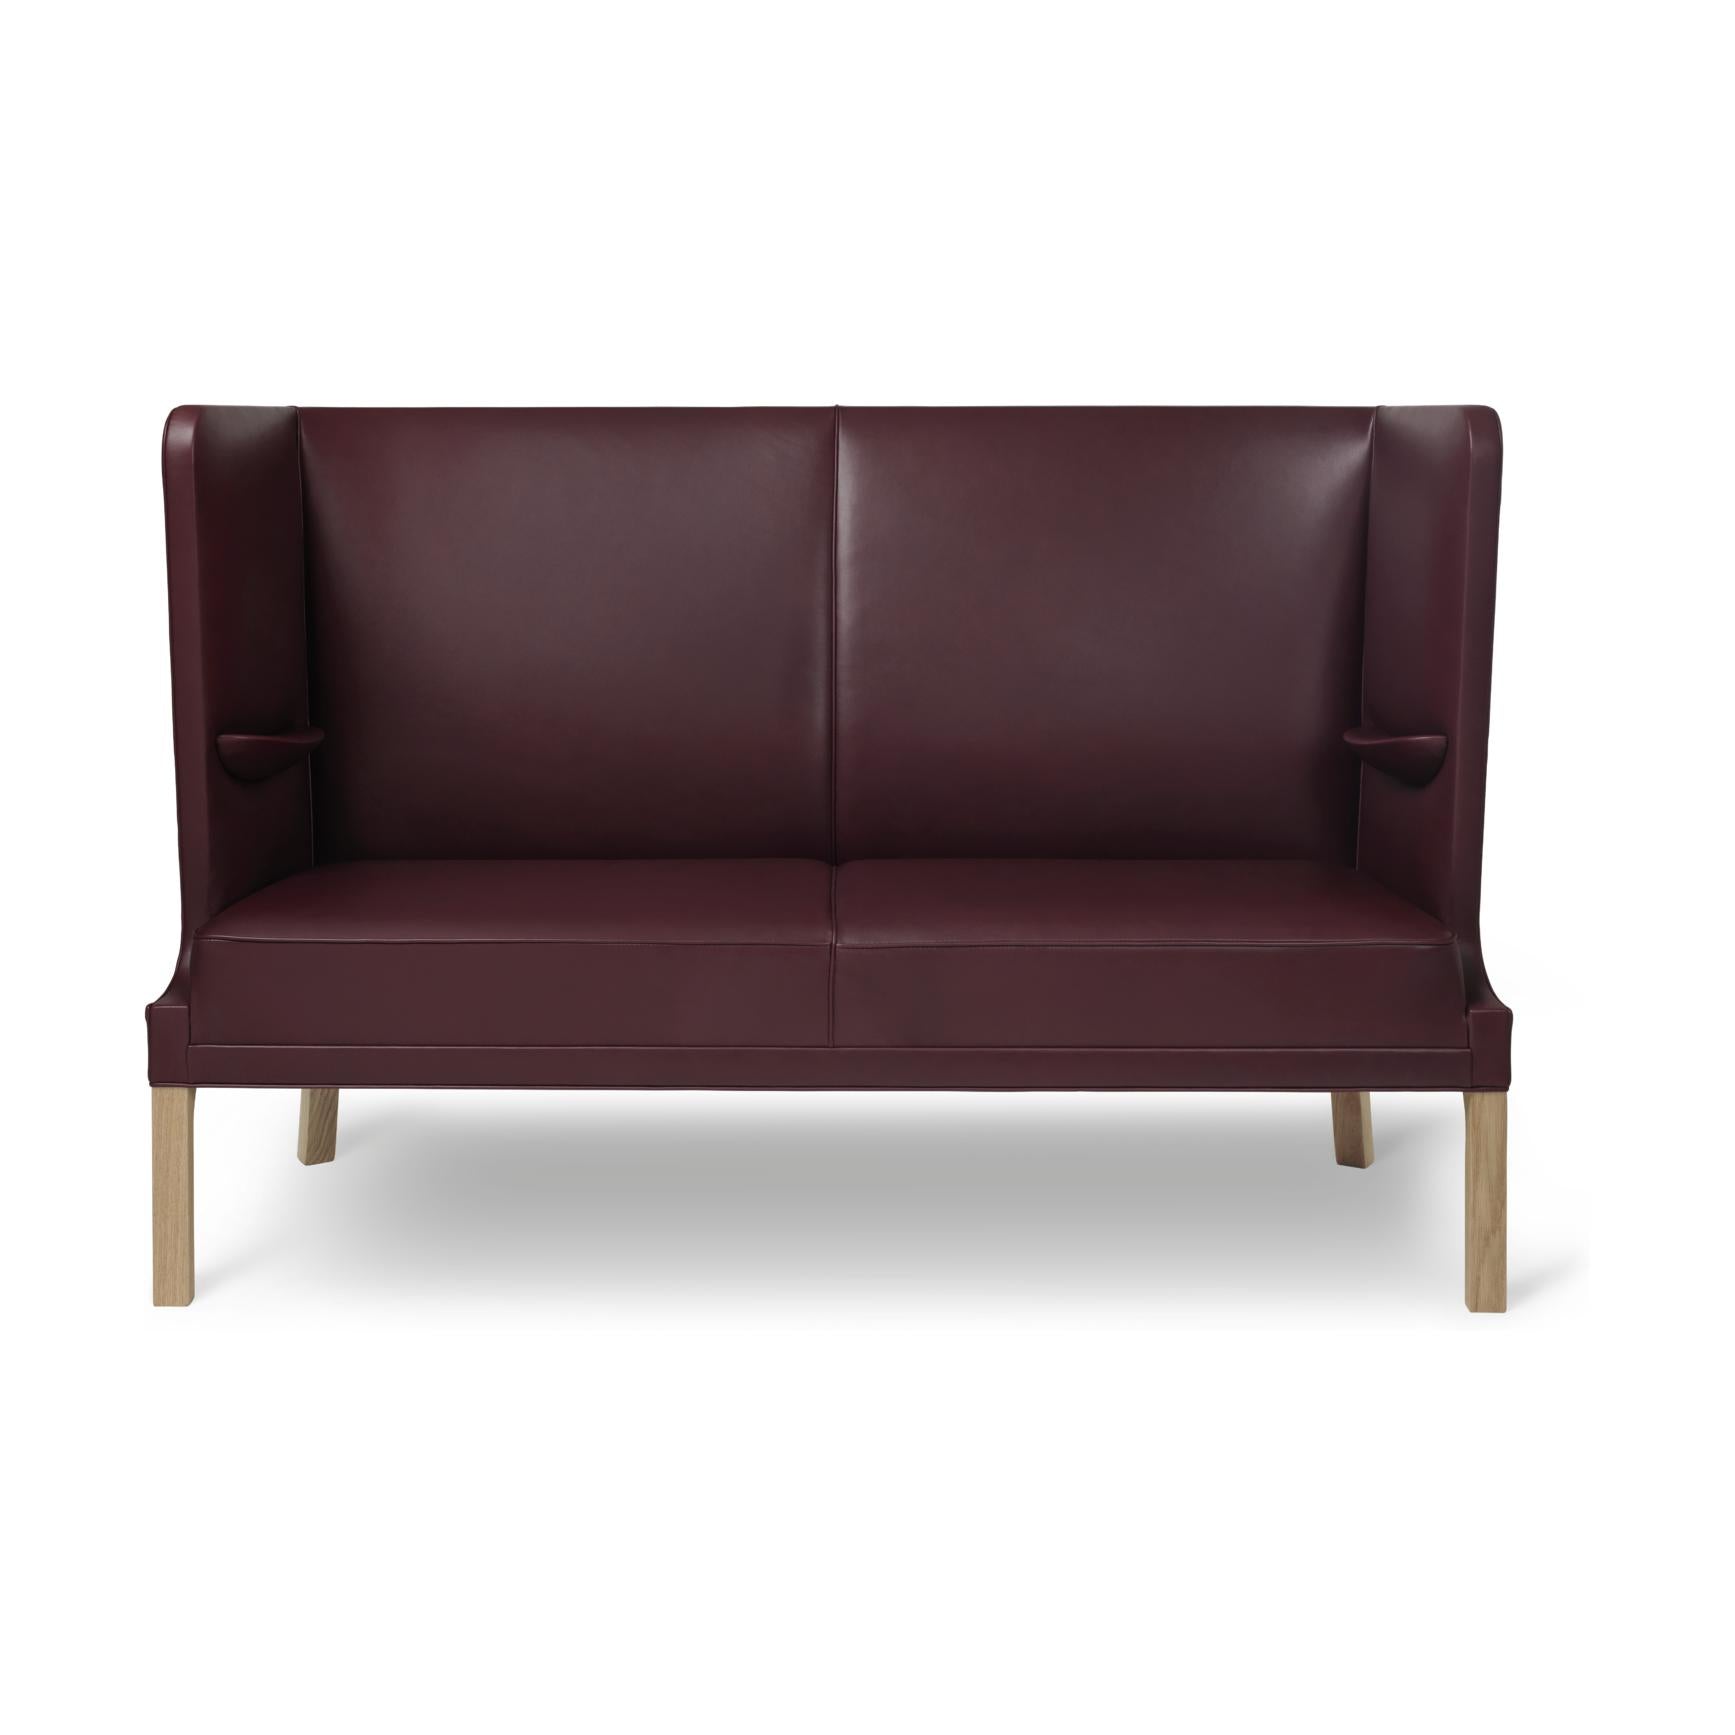 Carl Hansen FH436 Coupé divano, in pelle di quercia/bordeautica oliata